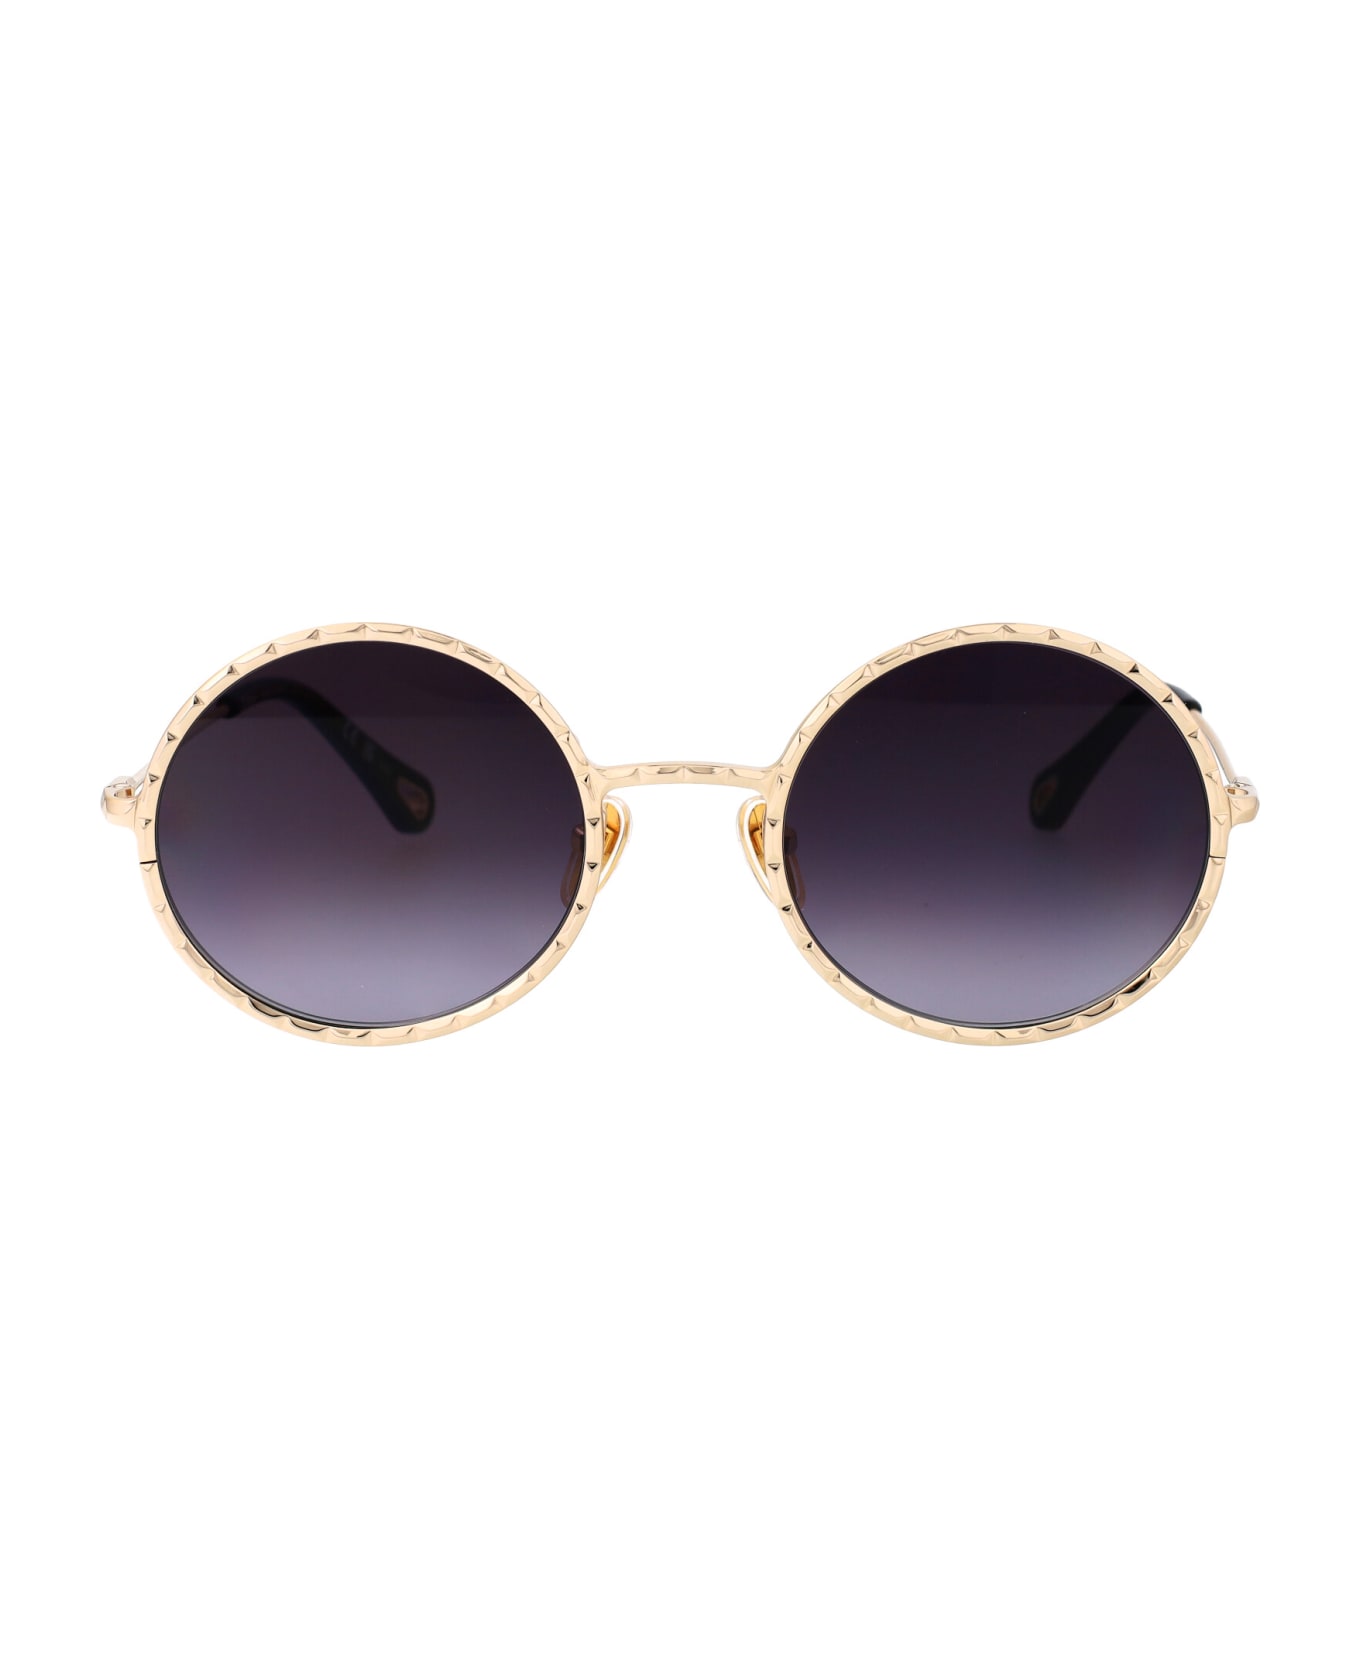 Chloé Eyewear Ch0230s Sunglasses - 001 GOLD GOLD GREY サングラス